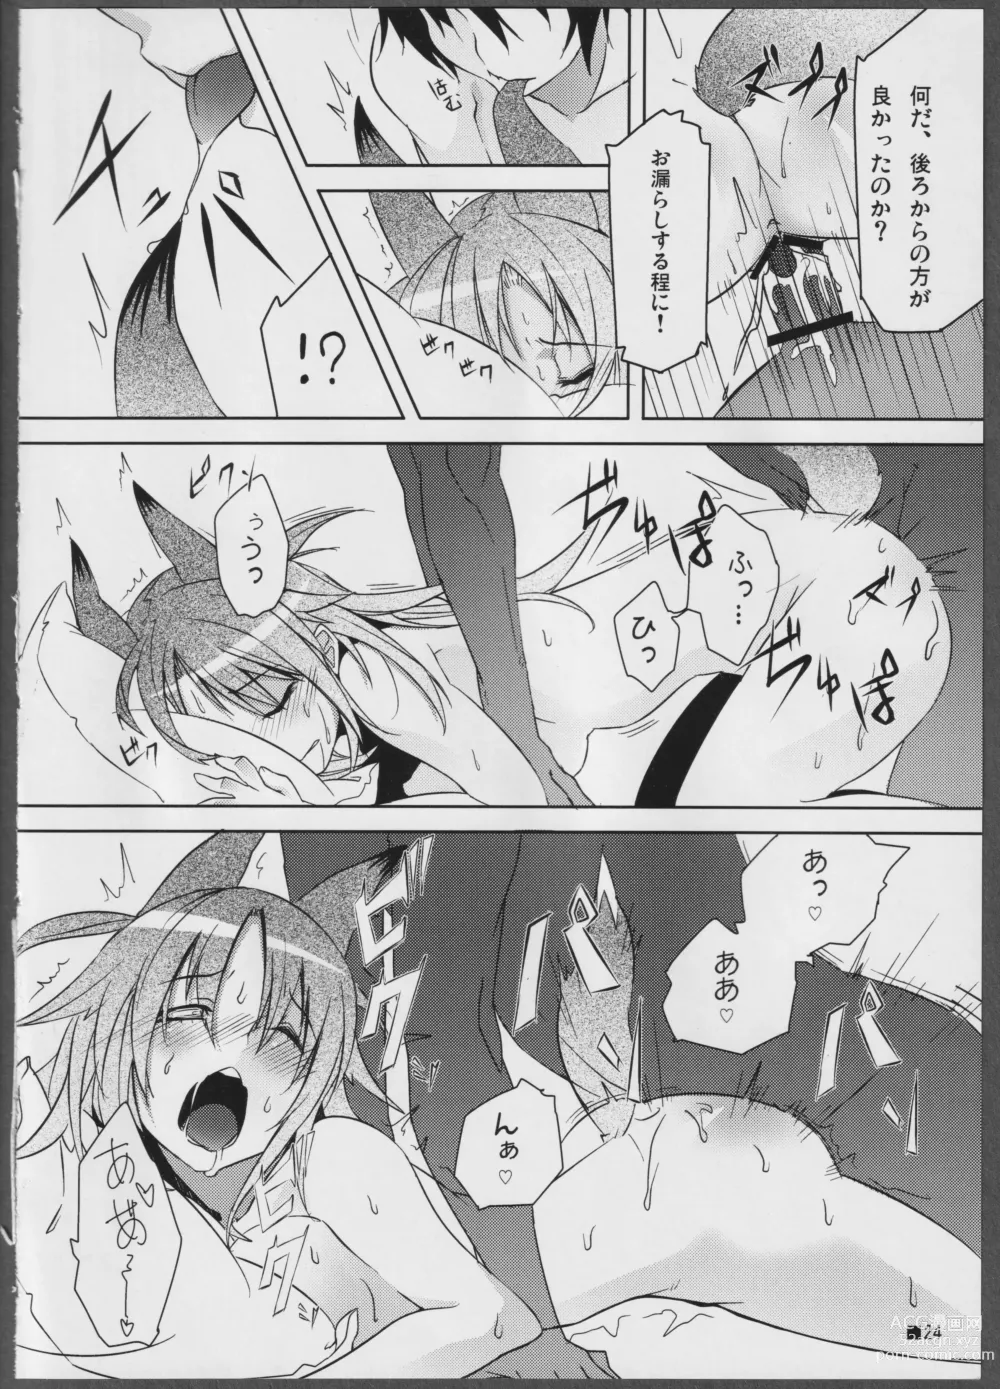 Page 24 of doujinshi Nohohon-san no Hon #01